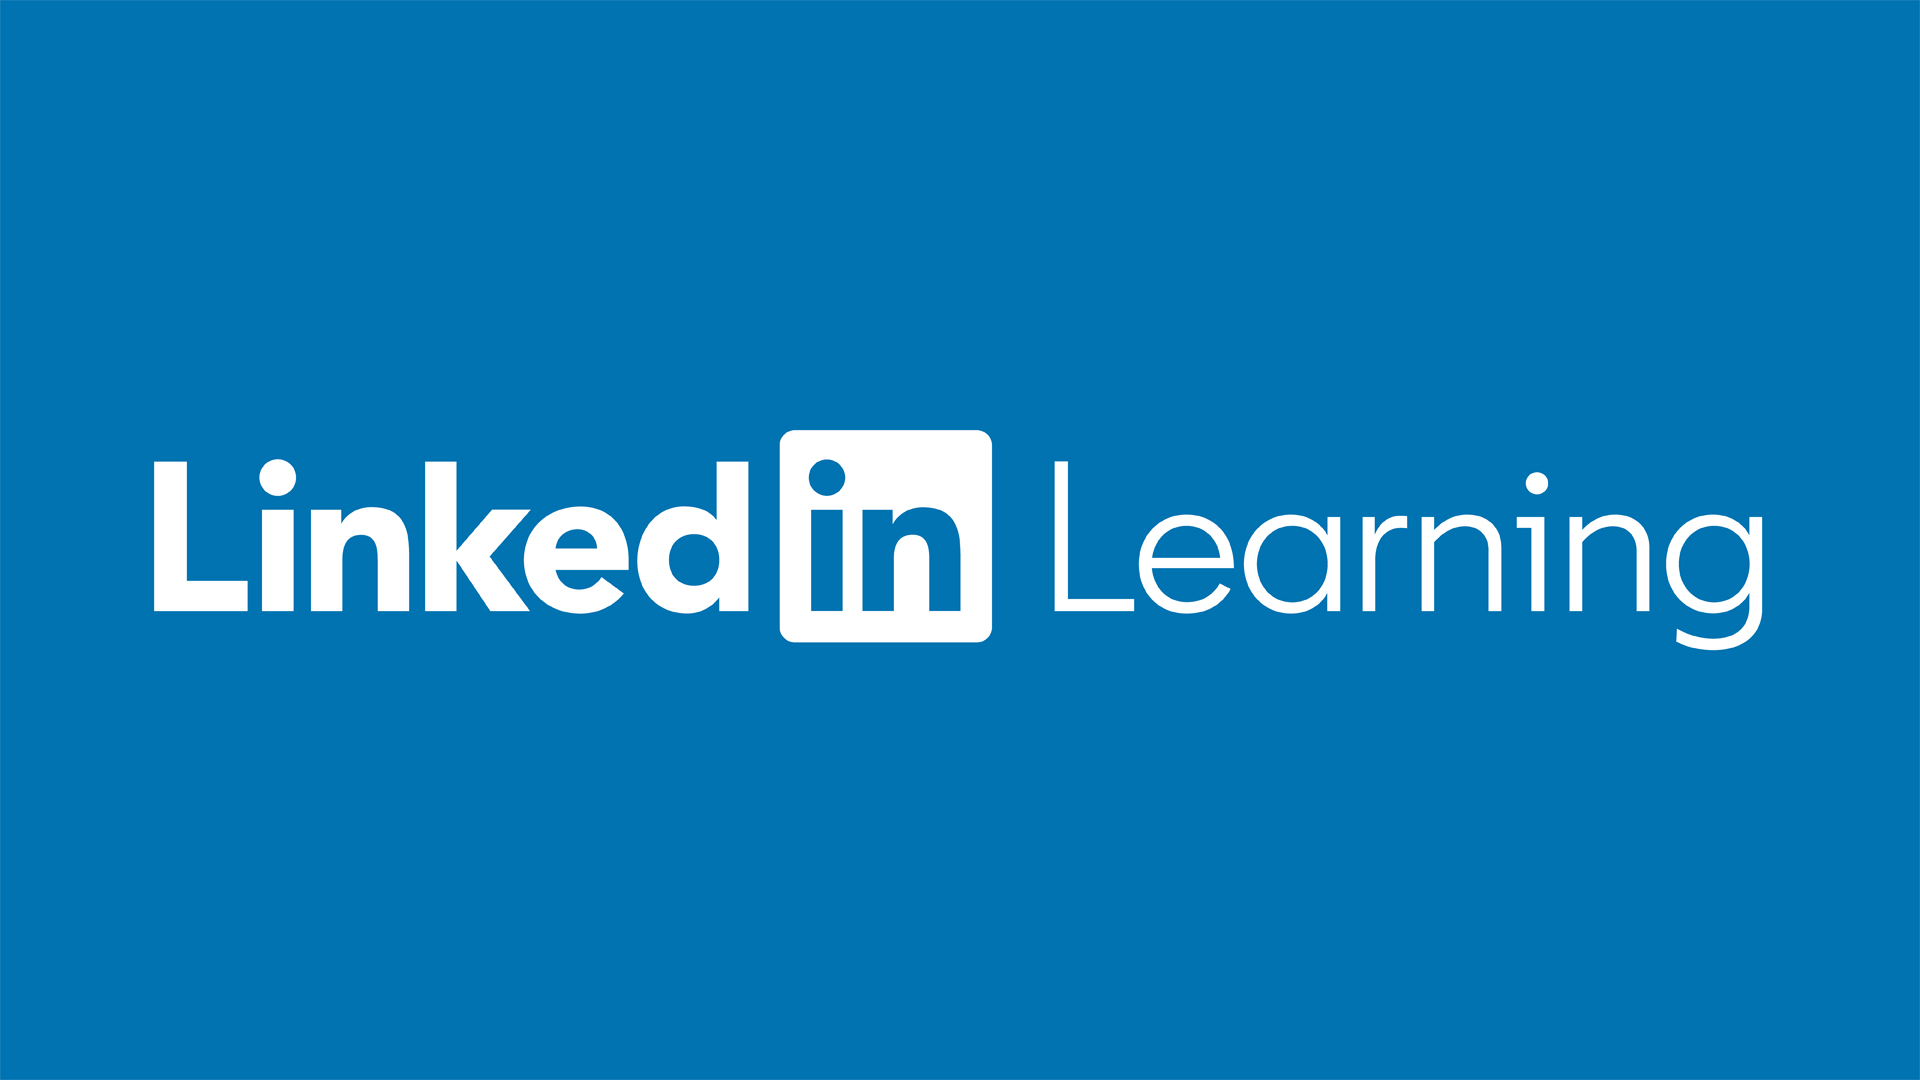 linkedin learning logo png